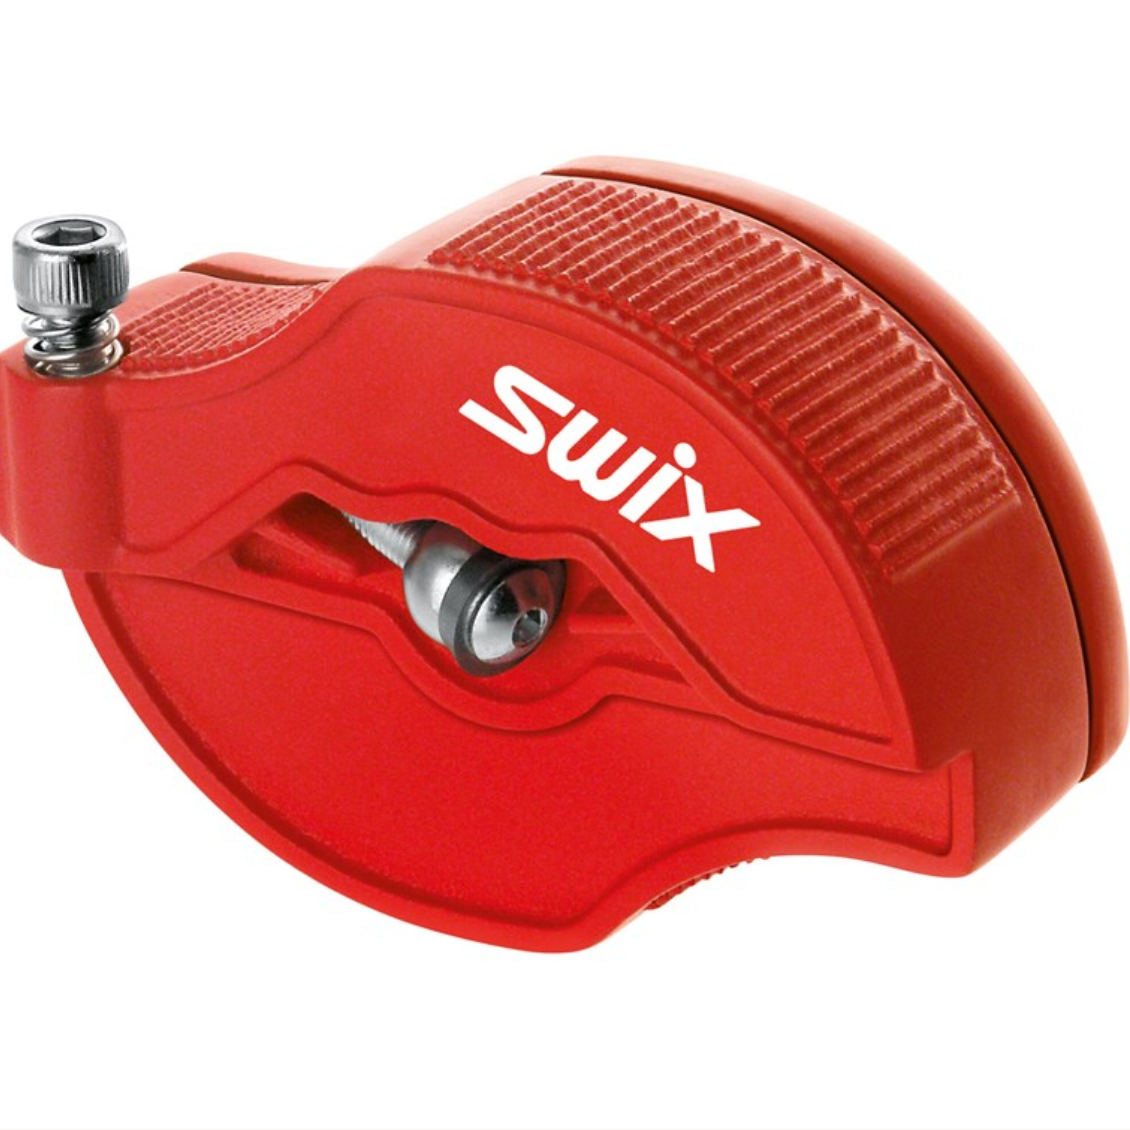 Swix TA101N Sidewall cutter